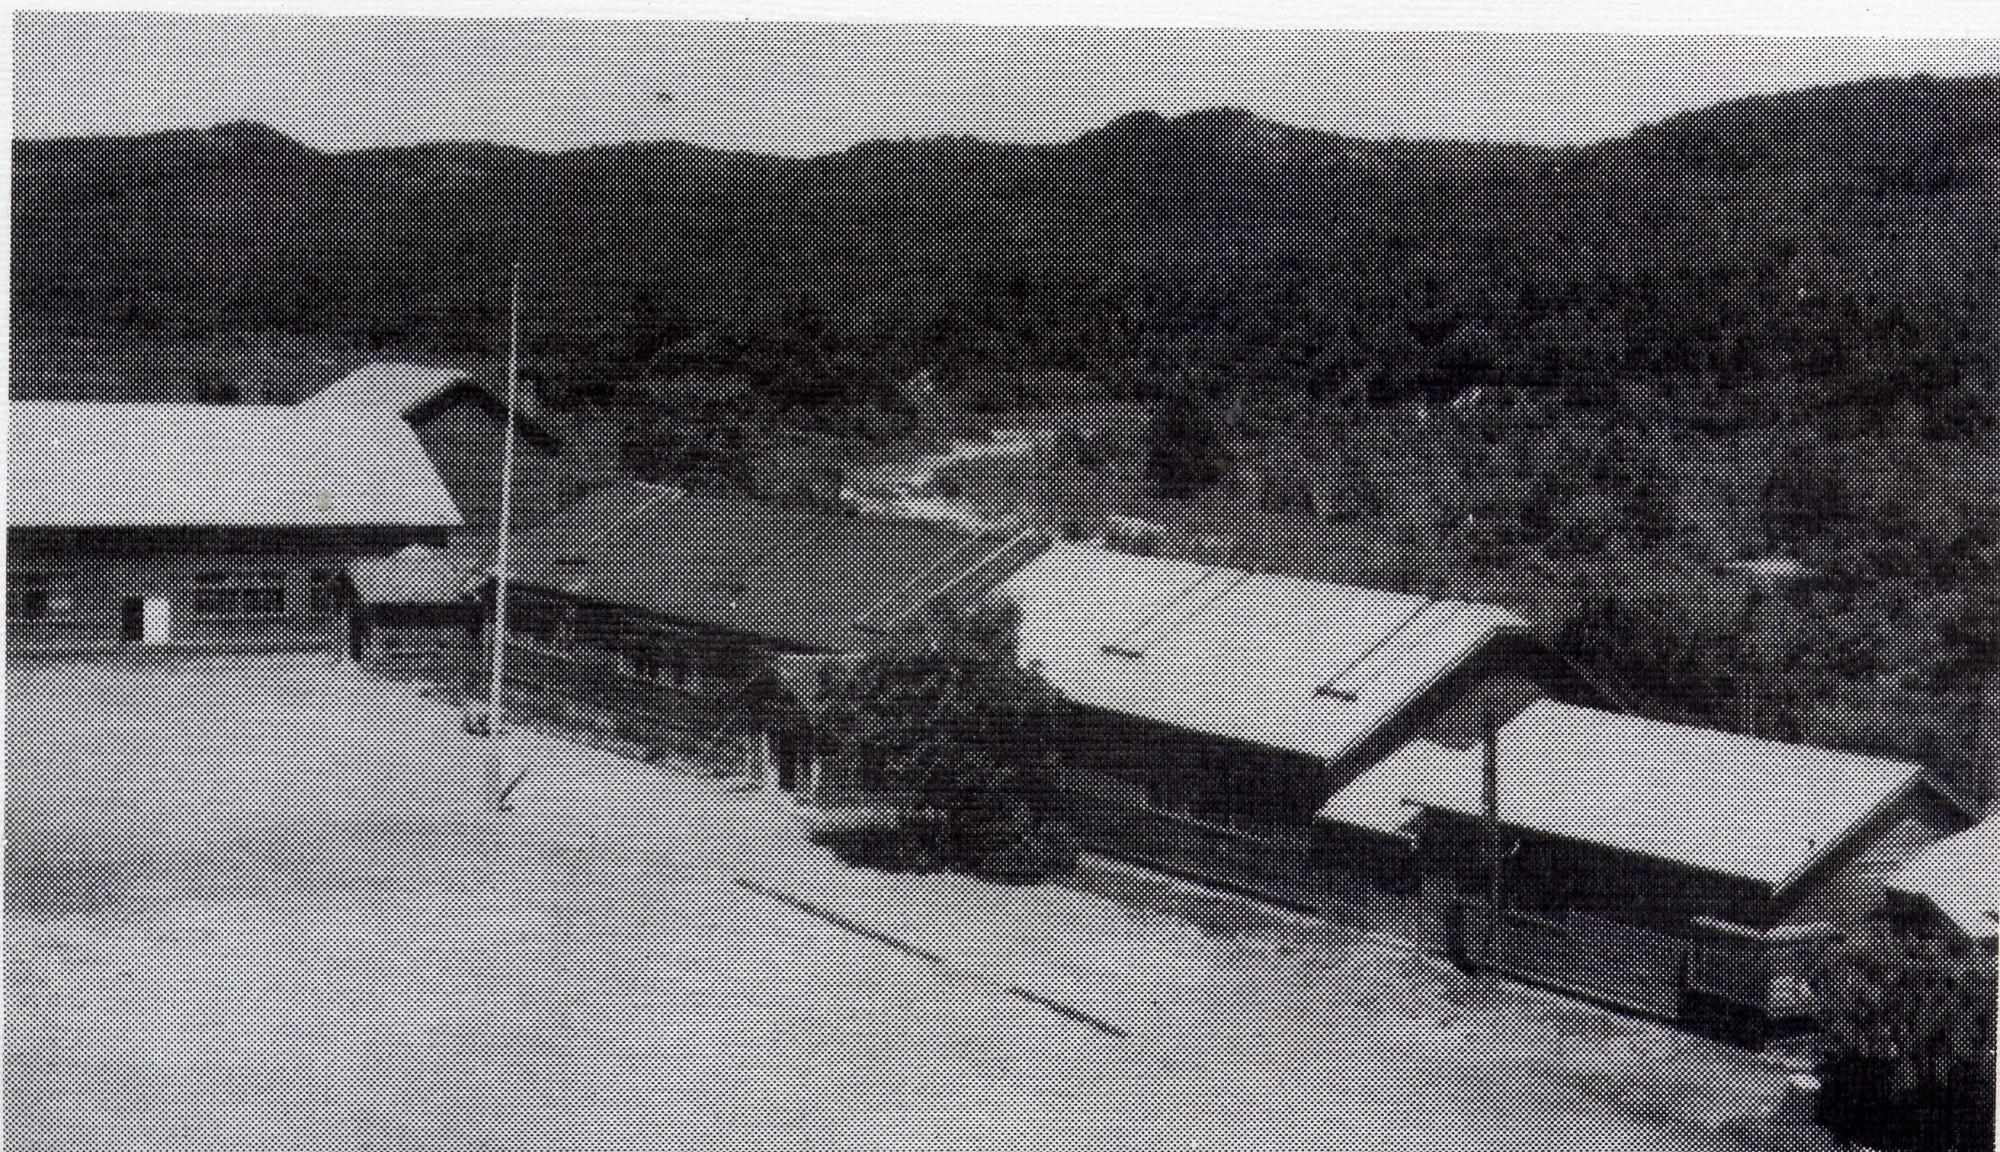 L字型に造られた昭和前半の旧白山小学校校舎を高台から撮影した白黒写真